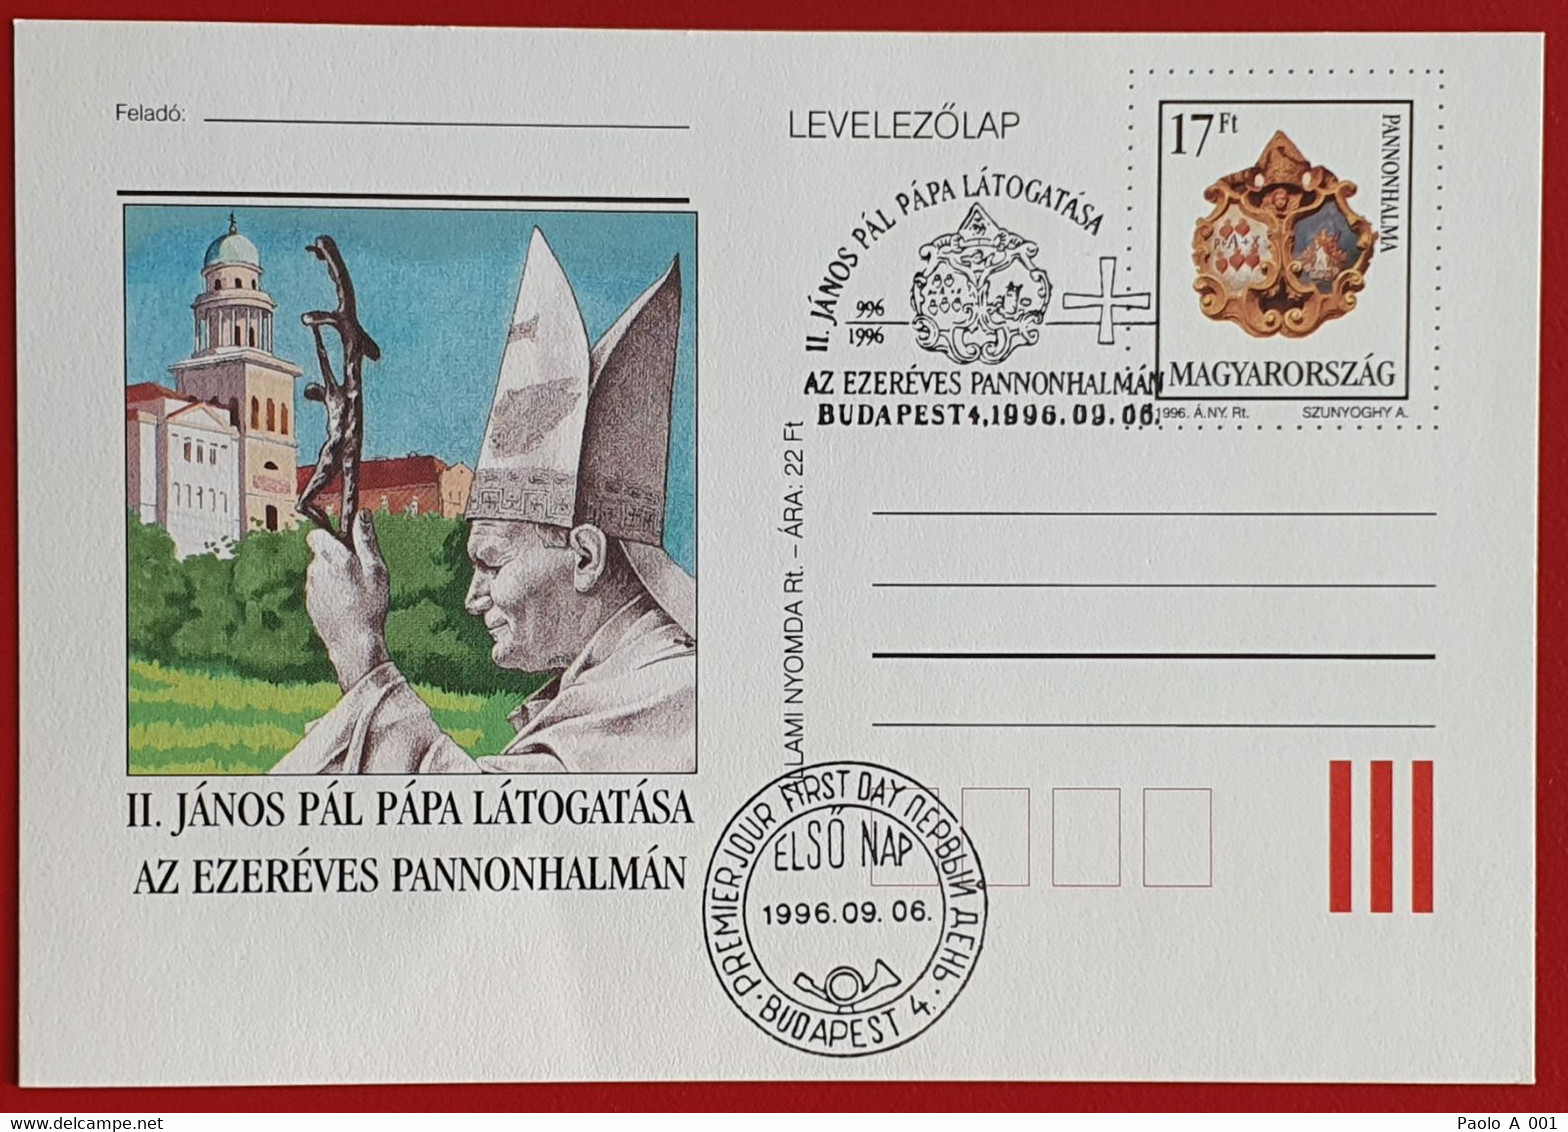 MAGYARORSZAG HUNGARY UNGARN 1996 EZEREVES PANNONHALMA BUDAPEST PAPAL VISIT LEVELEZÖLAP - Storia Postale